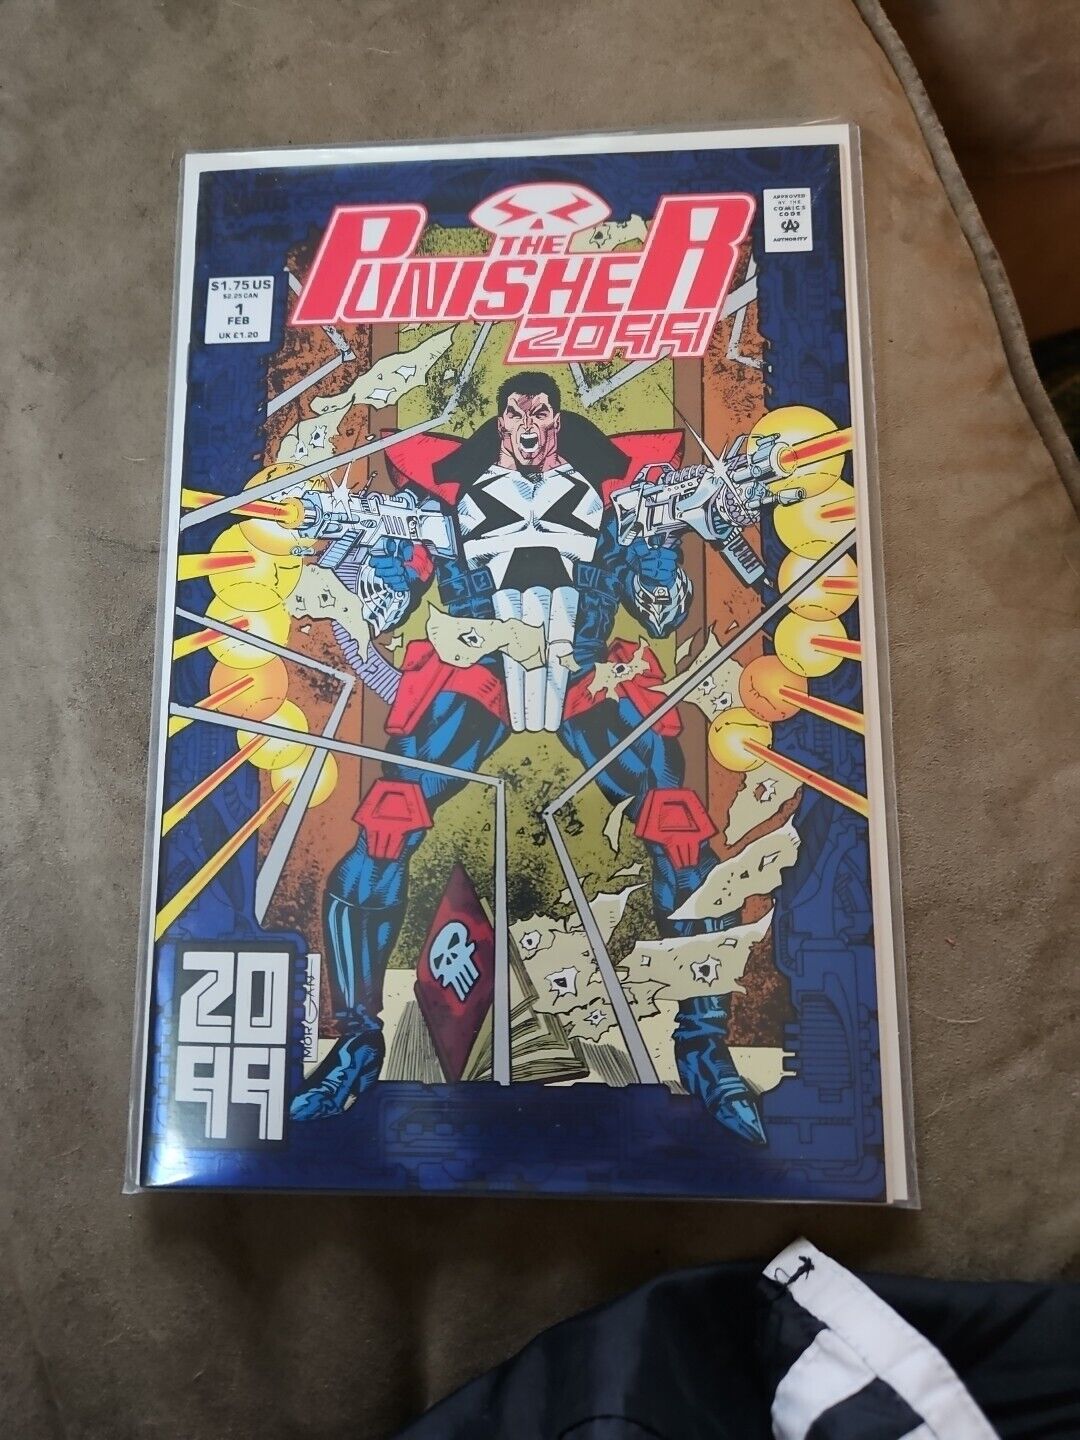 The Punisher 2099 #1 (Marvel Comics February 1993)